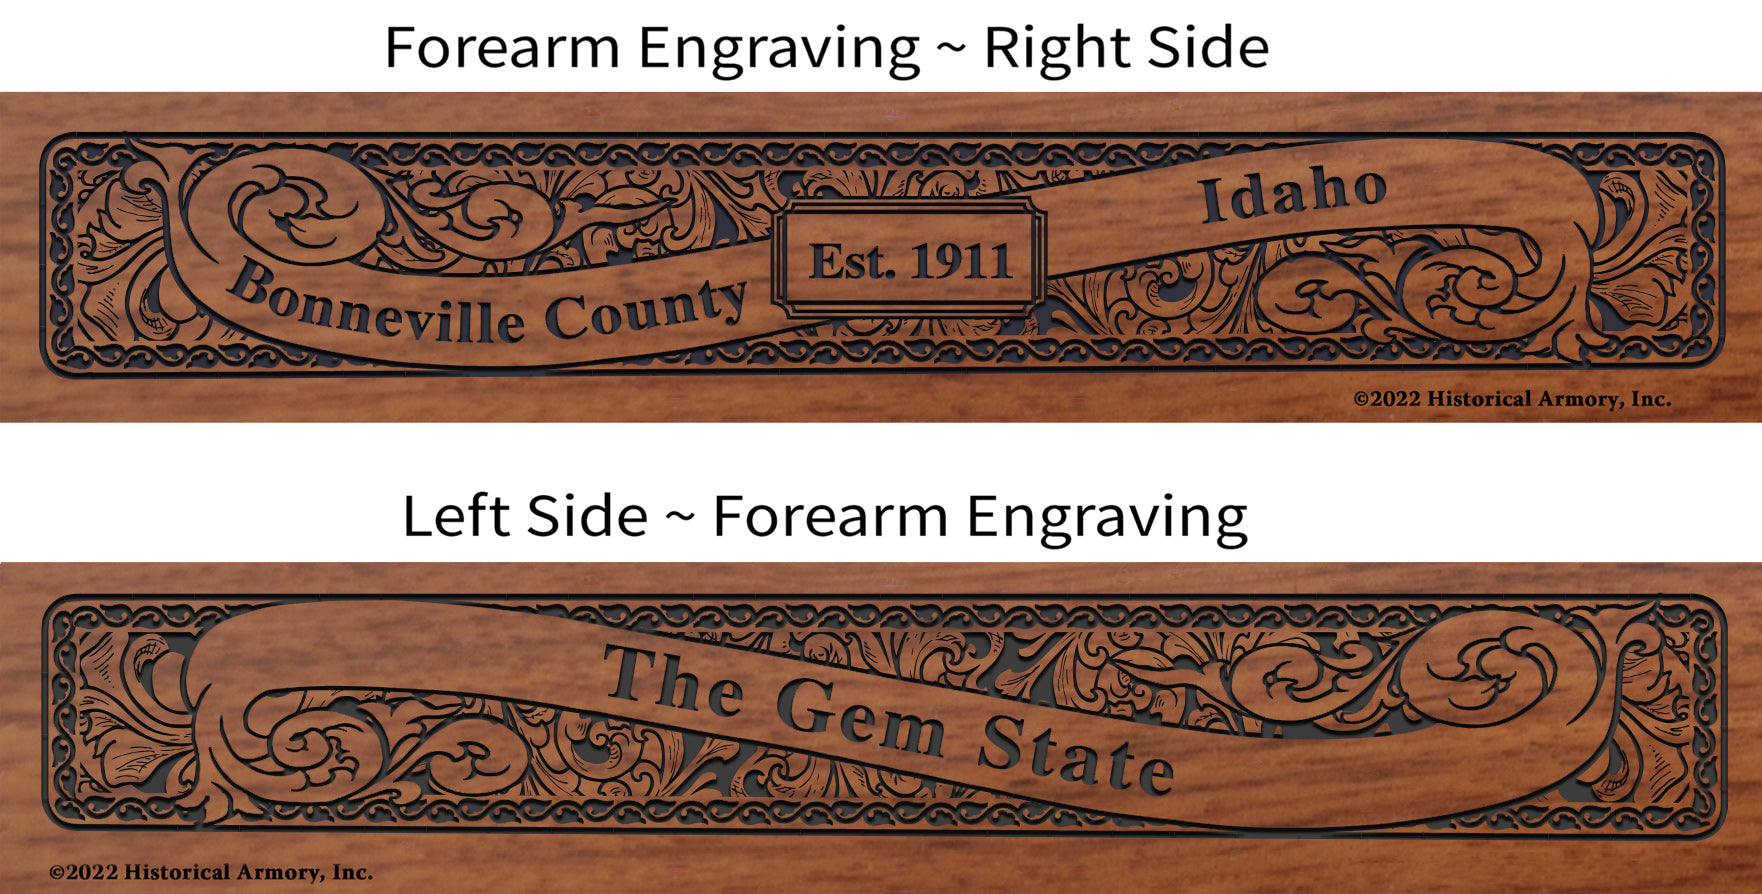 Bonneville County Idaho Engraved Rifle Forearm